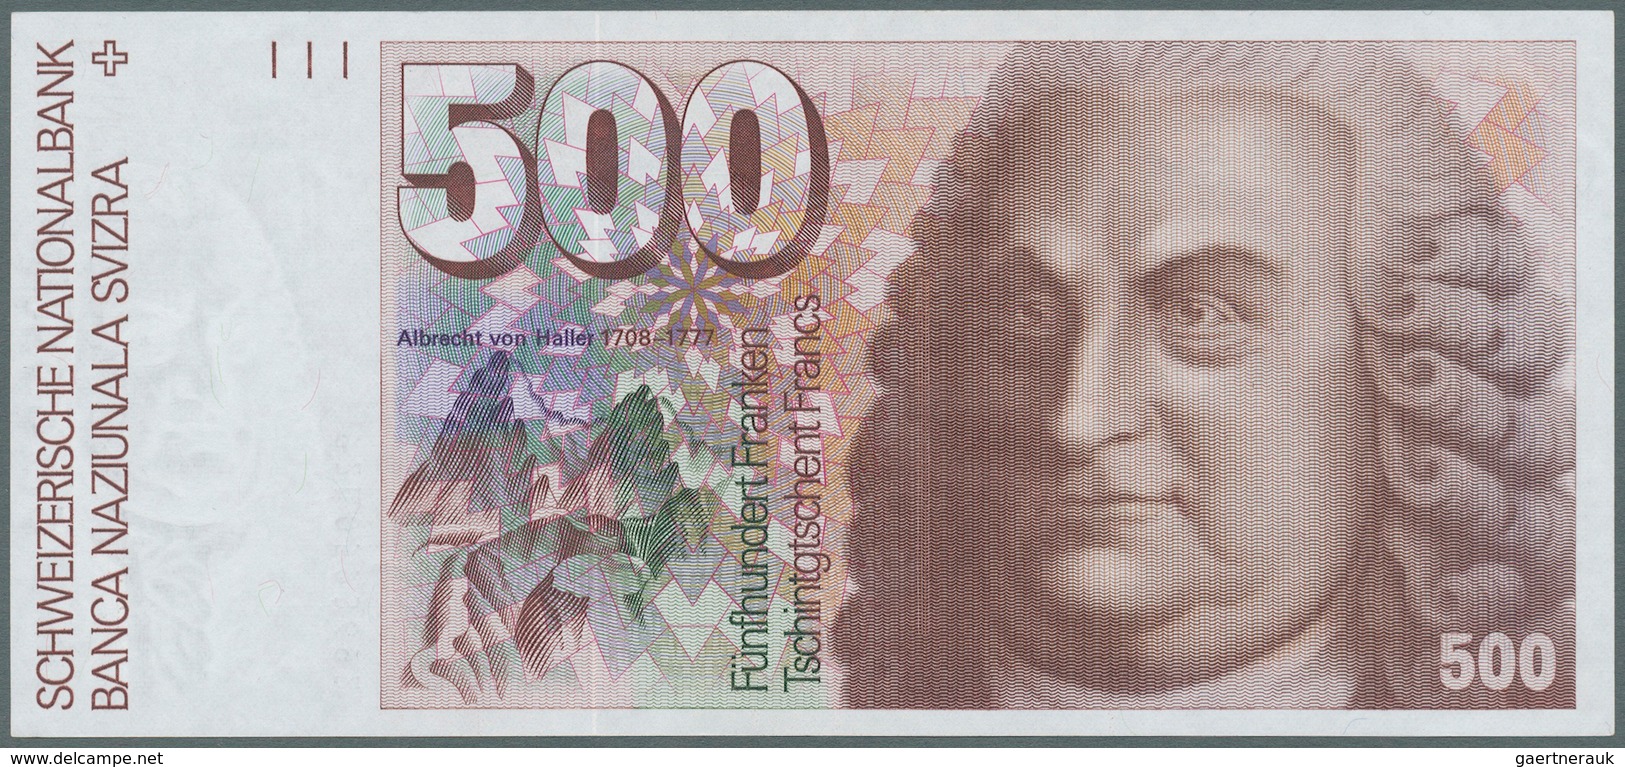 02467 Switzerland / Schweiz: 500 Franken 1992 P. 58c, Key Note, Very Light Center Fold, No Holes Or Tears, - Switzerland